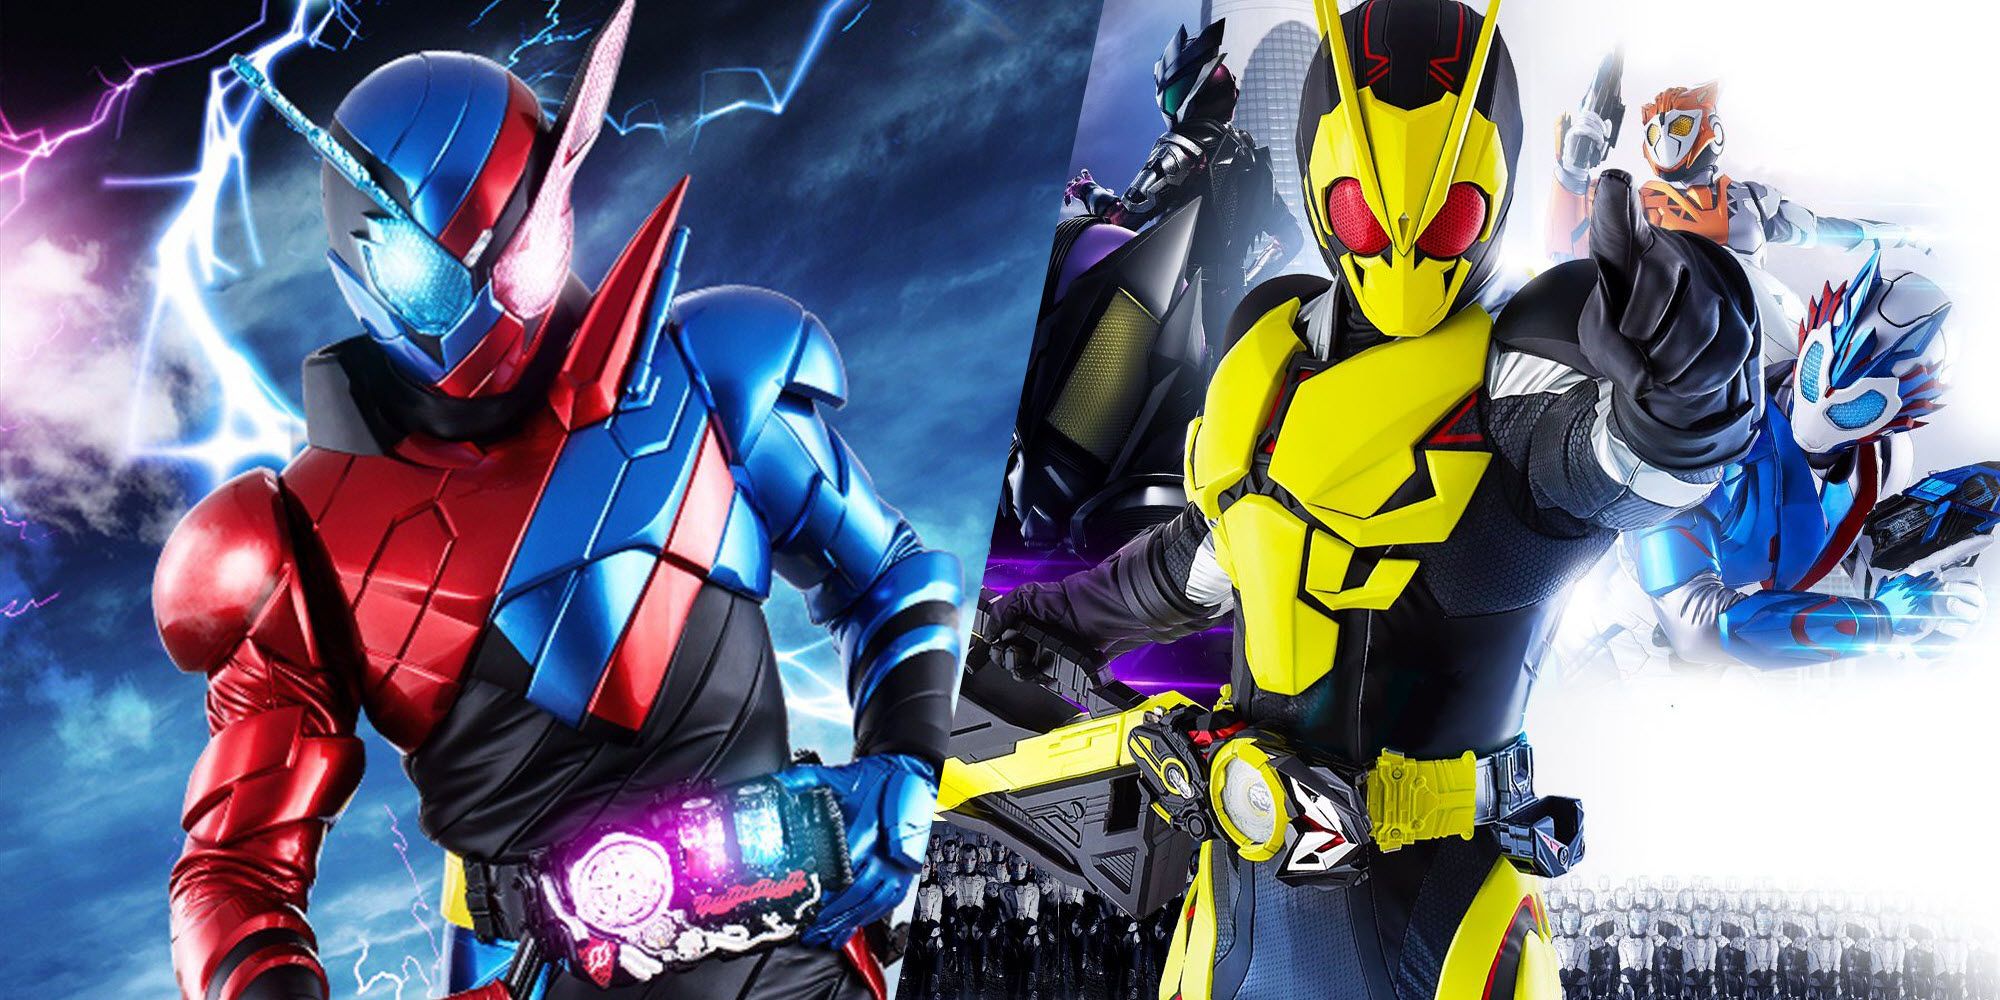 Kamen Rider W (TV Series 2009–2010) - IMDb